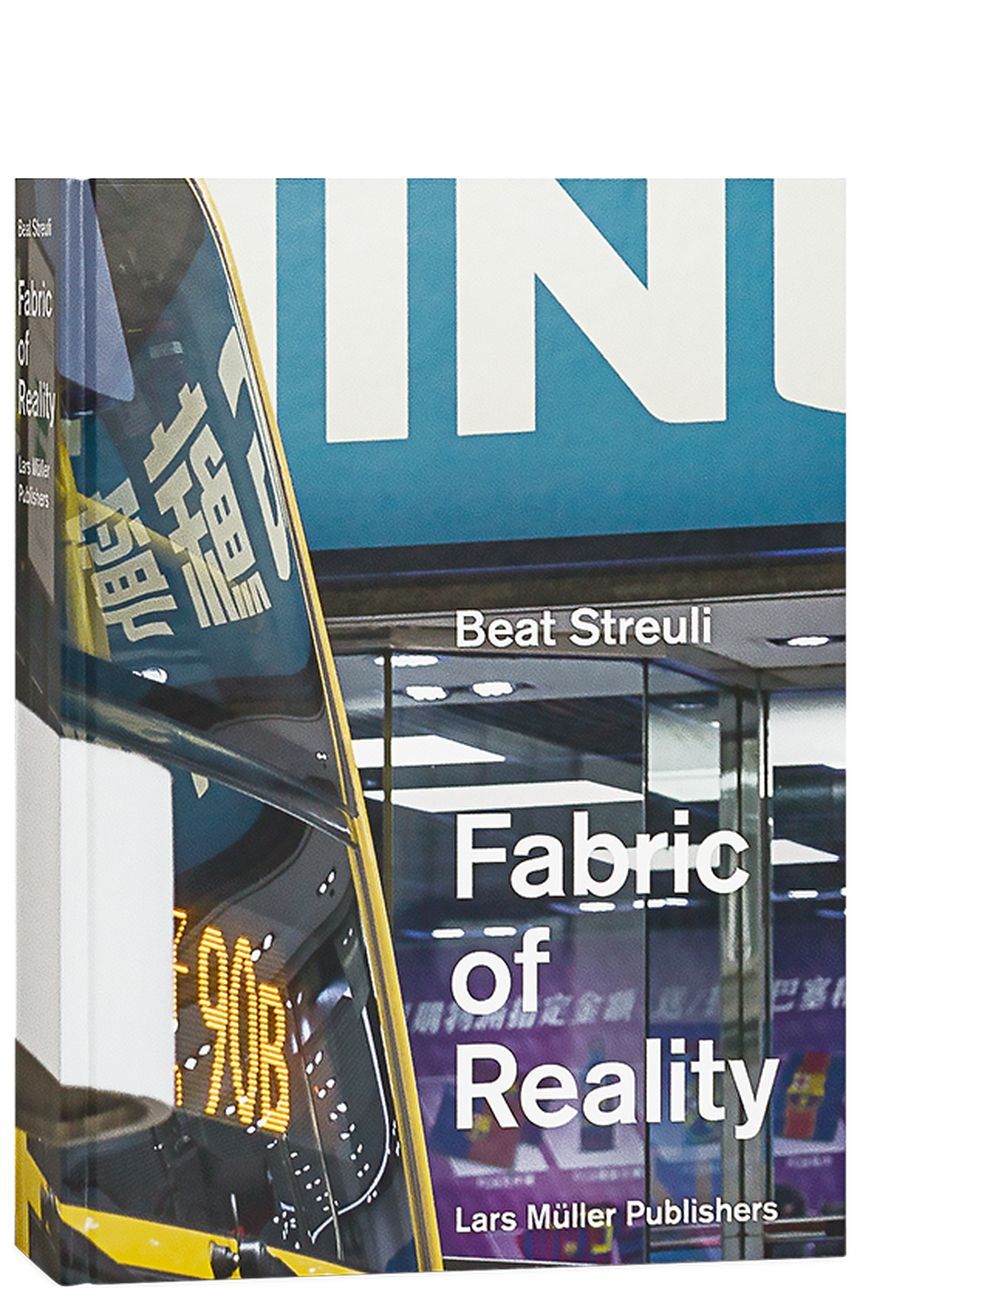 Beat Streuli. Fabric of Reality (Lars Müller, 2019)